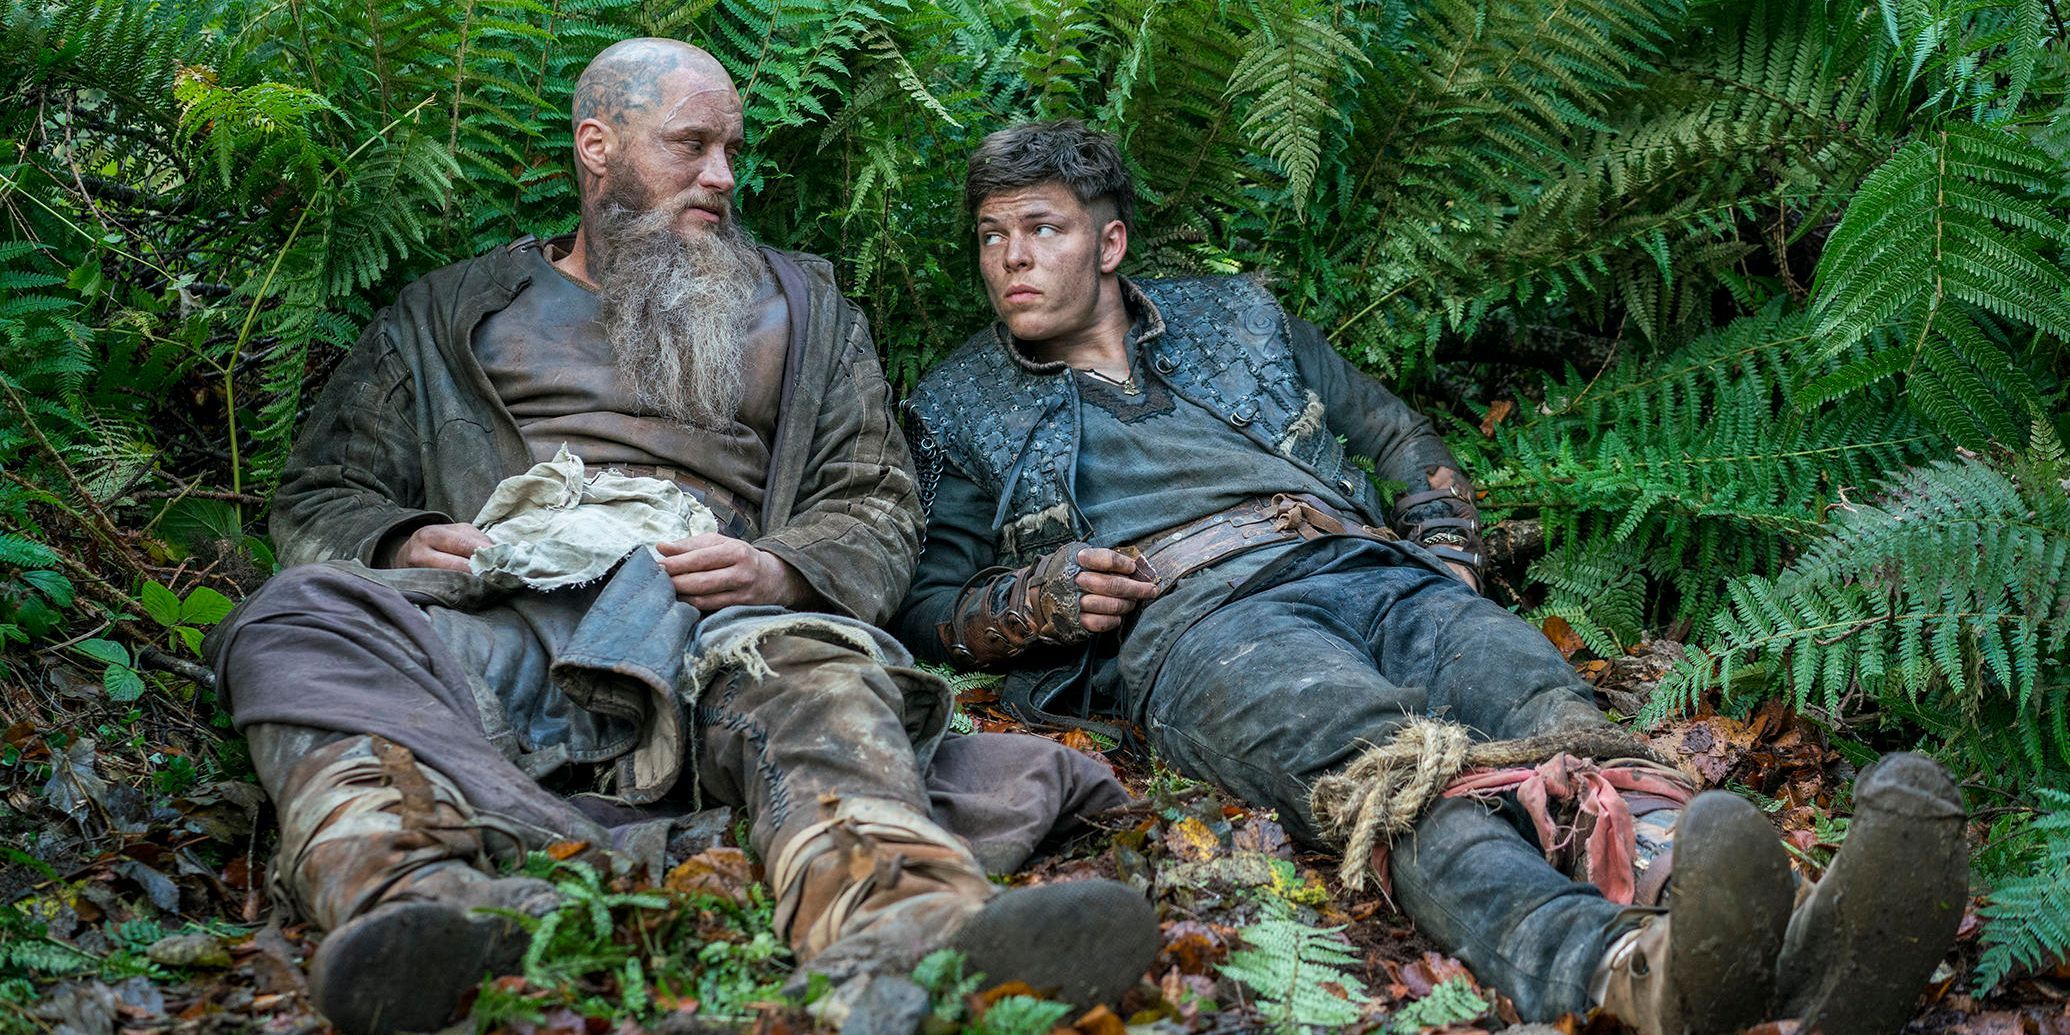 Ragnar and Ivar in England before Ragnar was captured by King Ecbert in Vikings Season 4